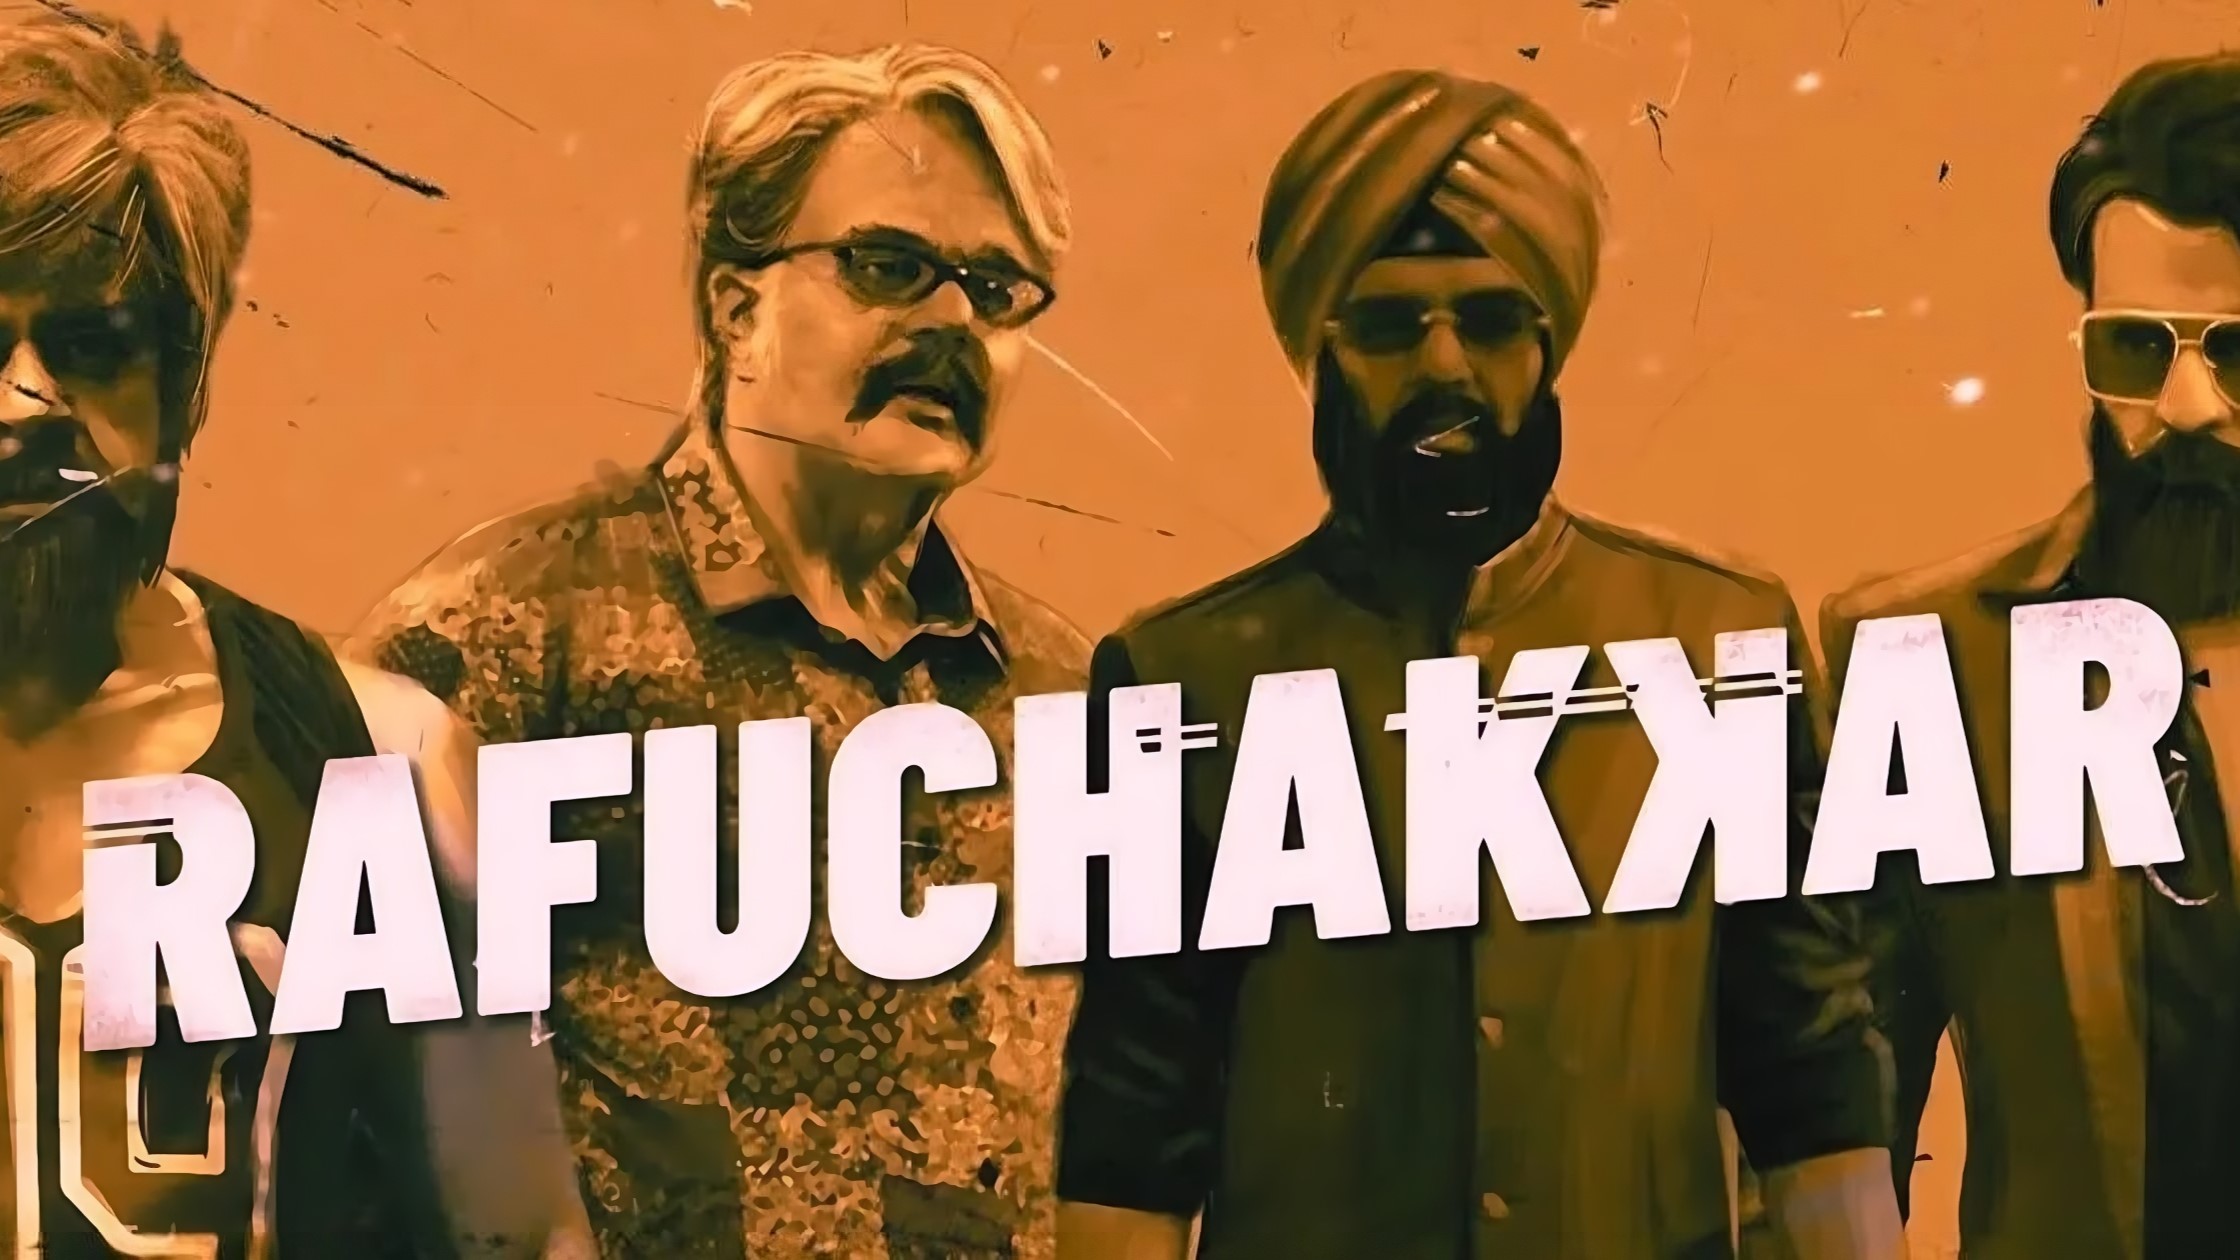 Rafuchakkar Season 2: Release Date